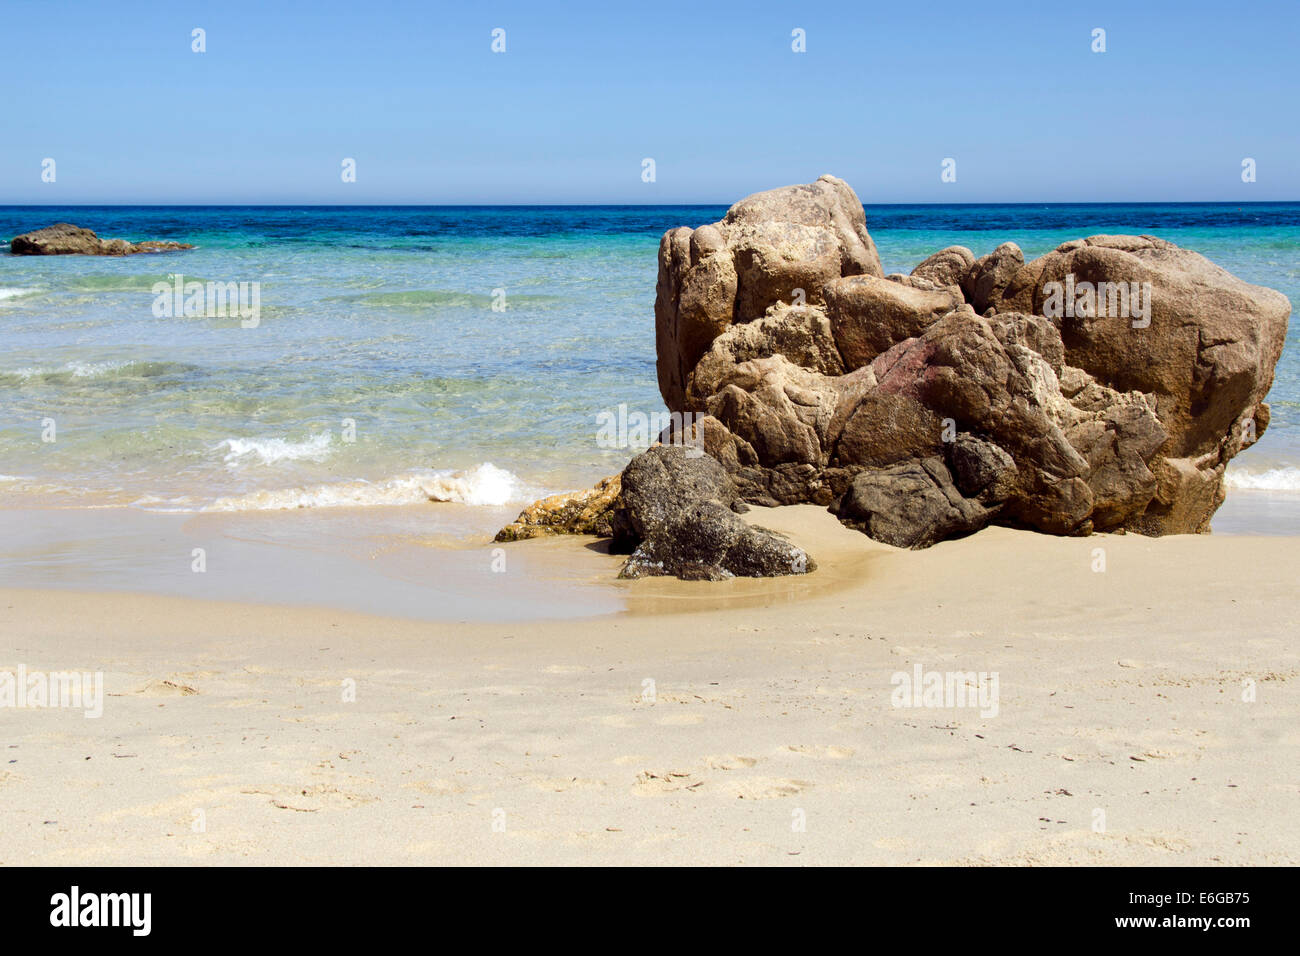 Beautiful sea in Sardegna - sand and rocks - Italy Stock Photo